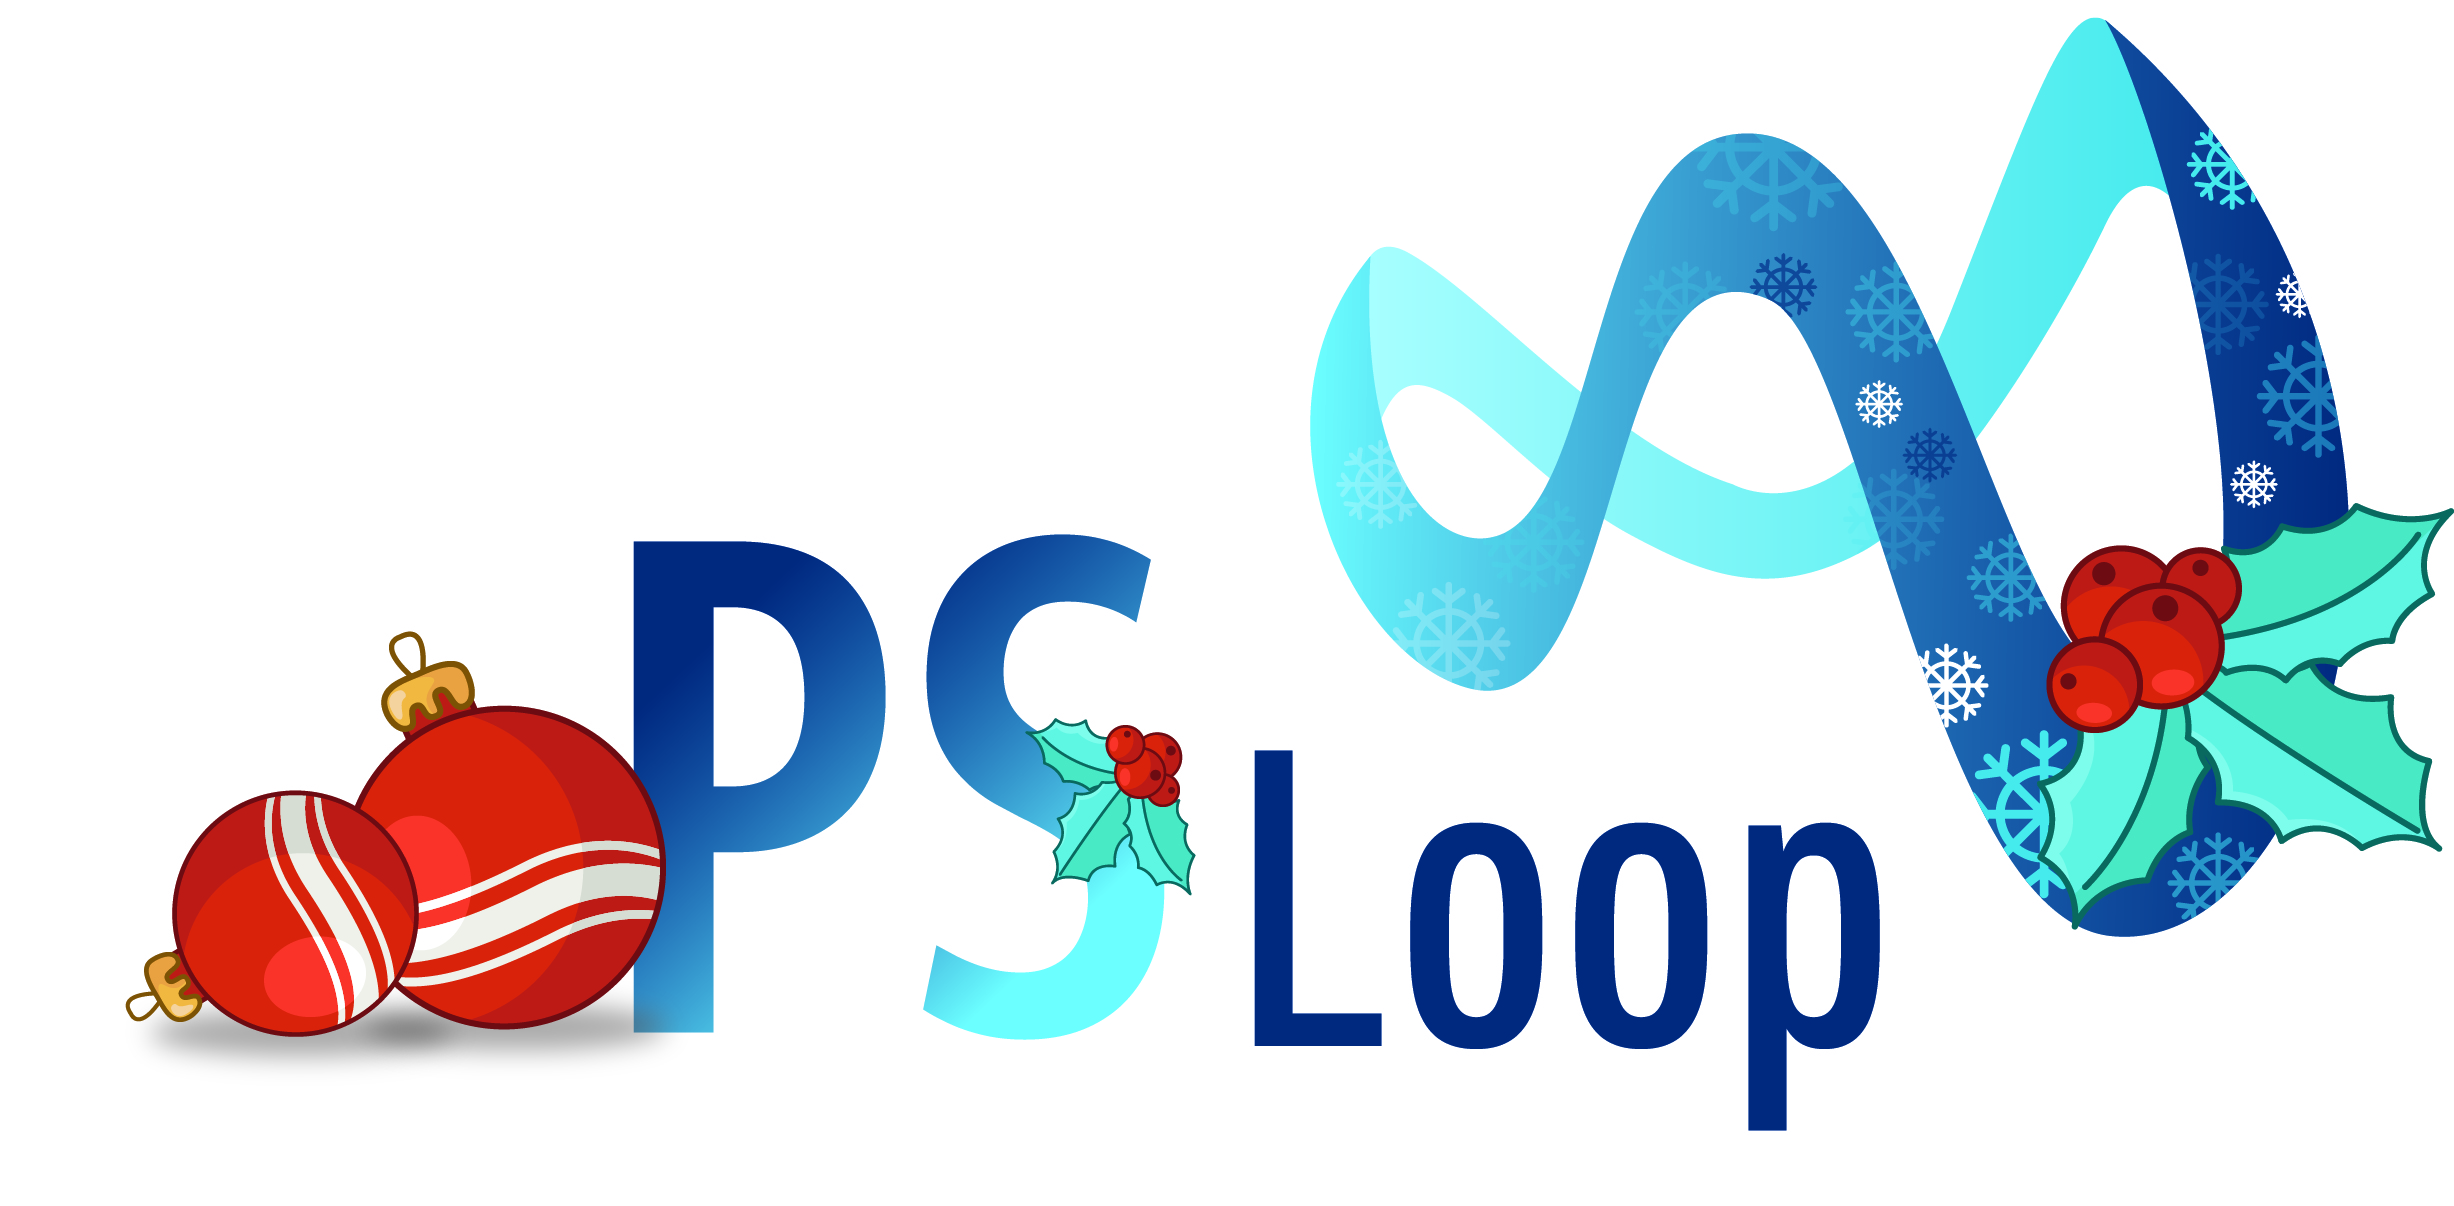 PS Loop_Kerstlogo